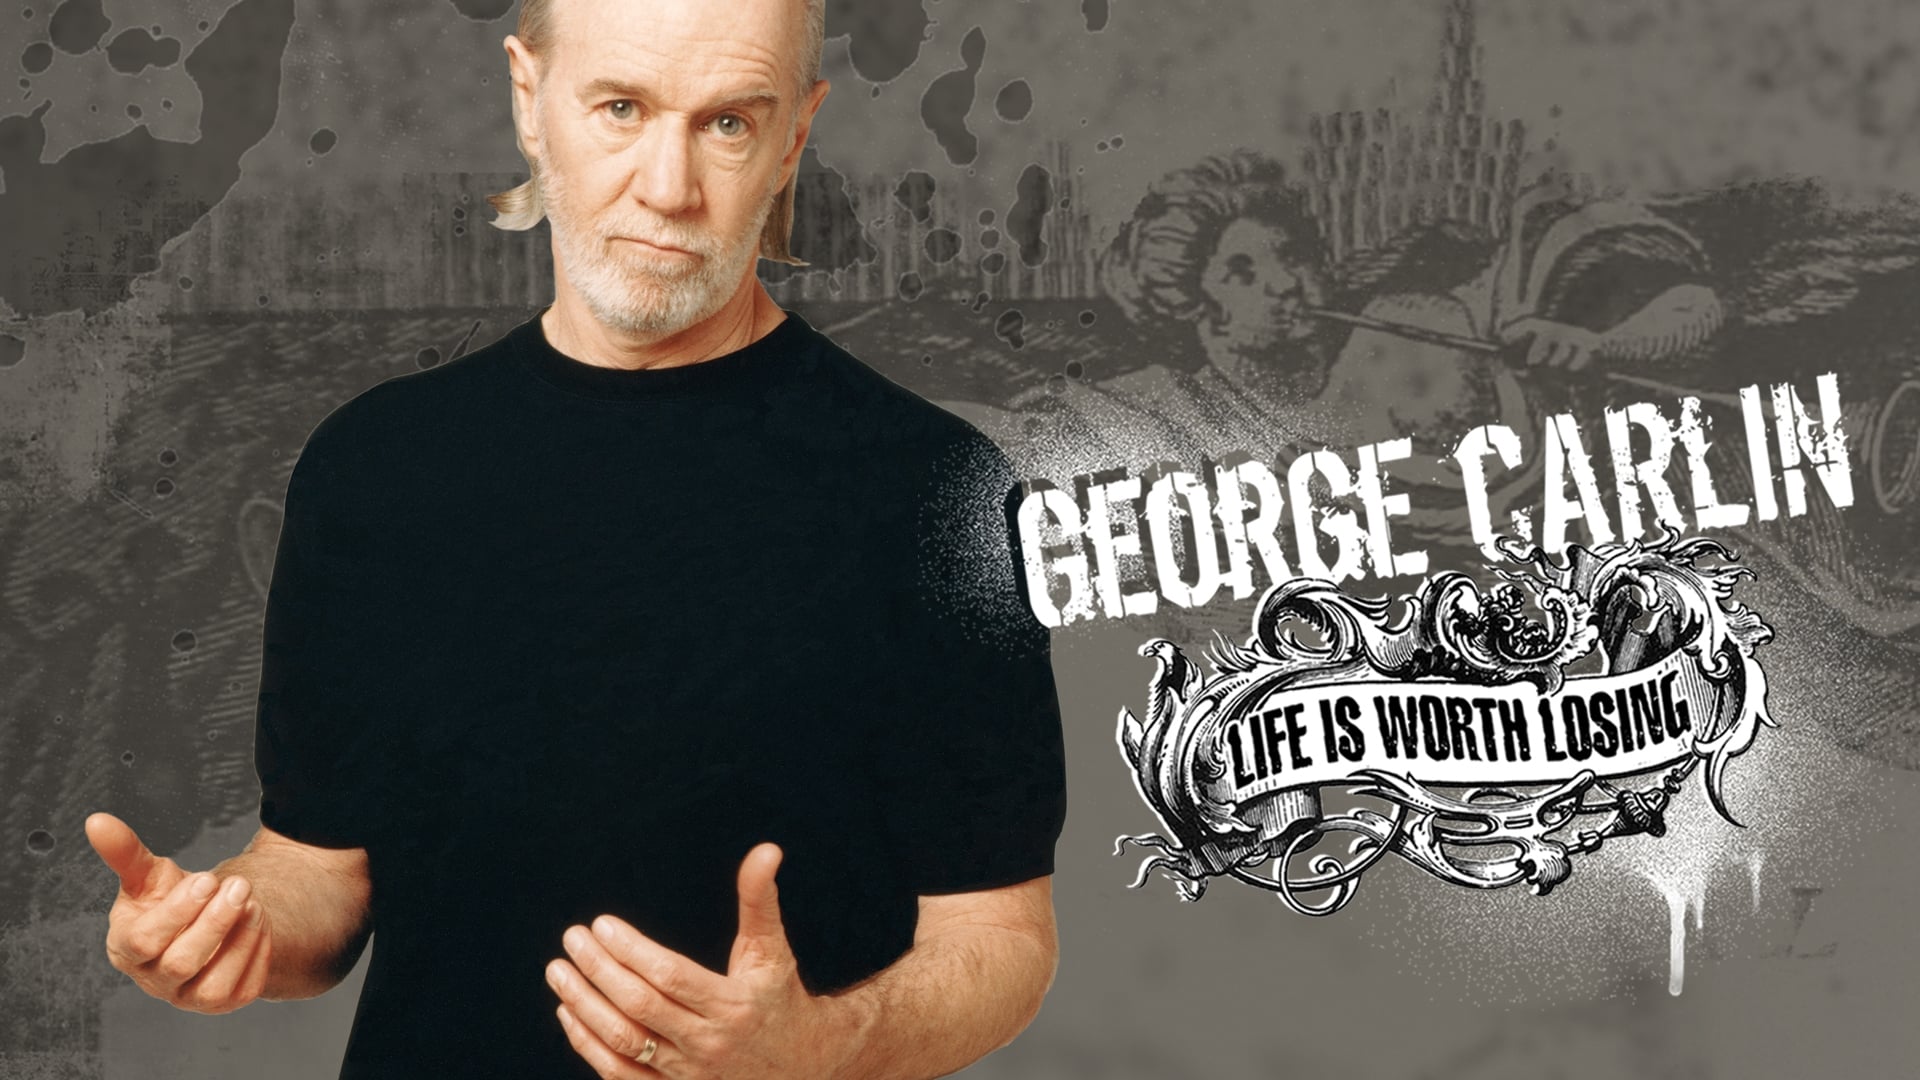 George Carlin: Life Is Worth Losing (2005)